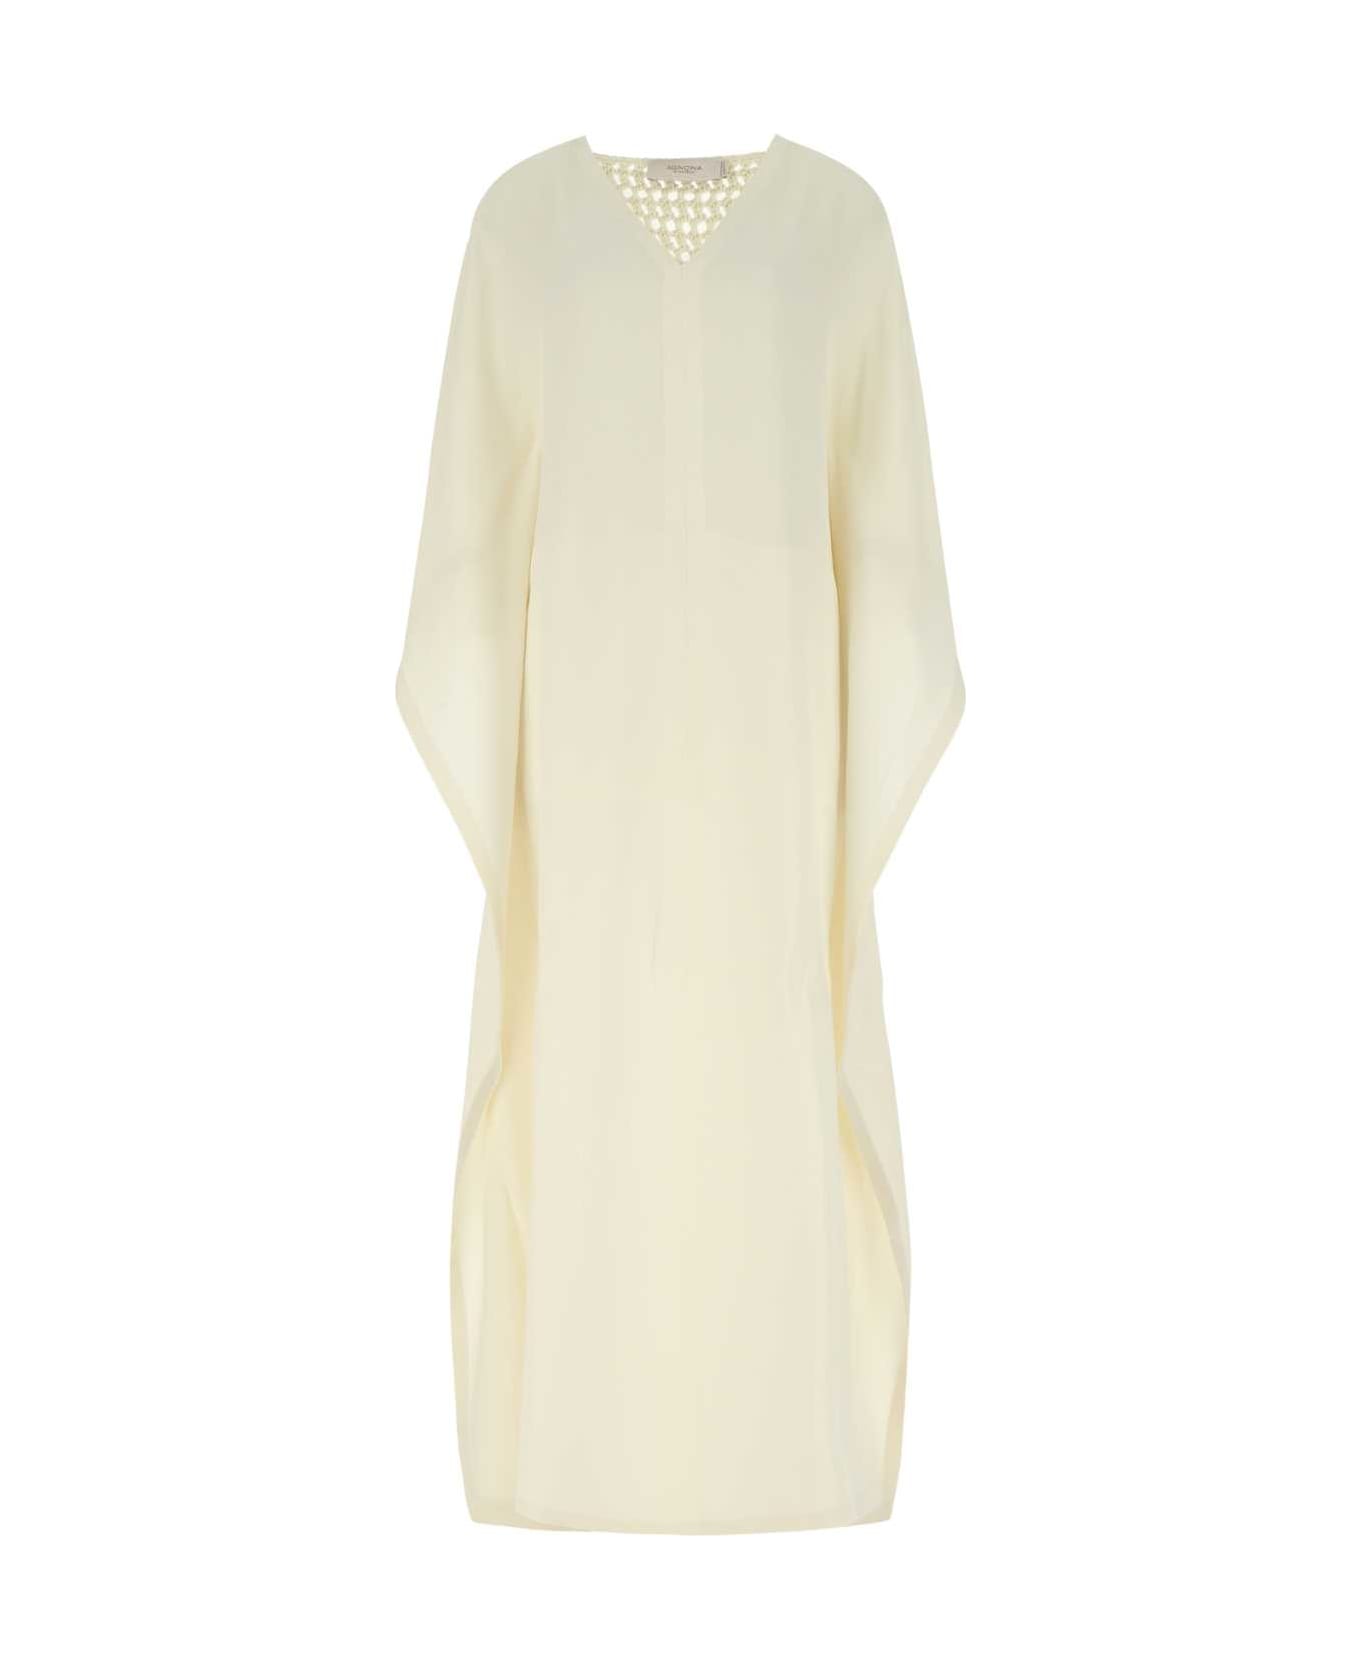 Agnona Ivory Wool Blend Tunic Dress - N00